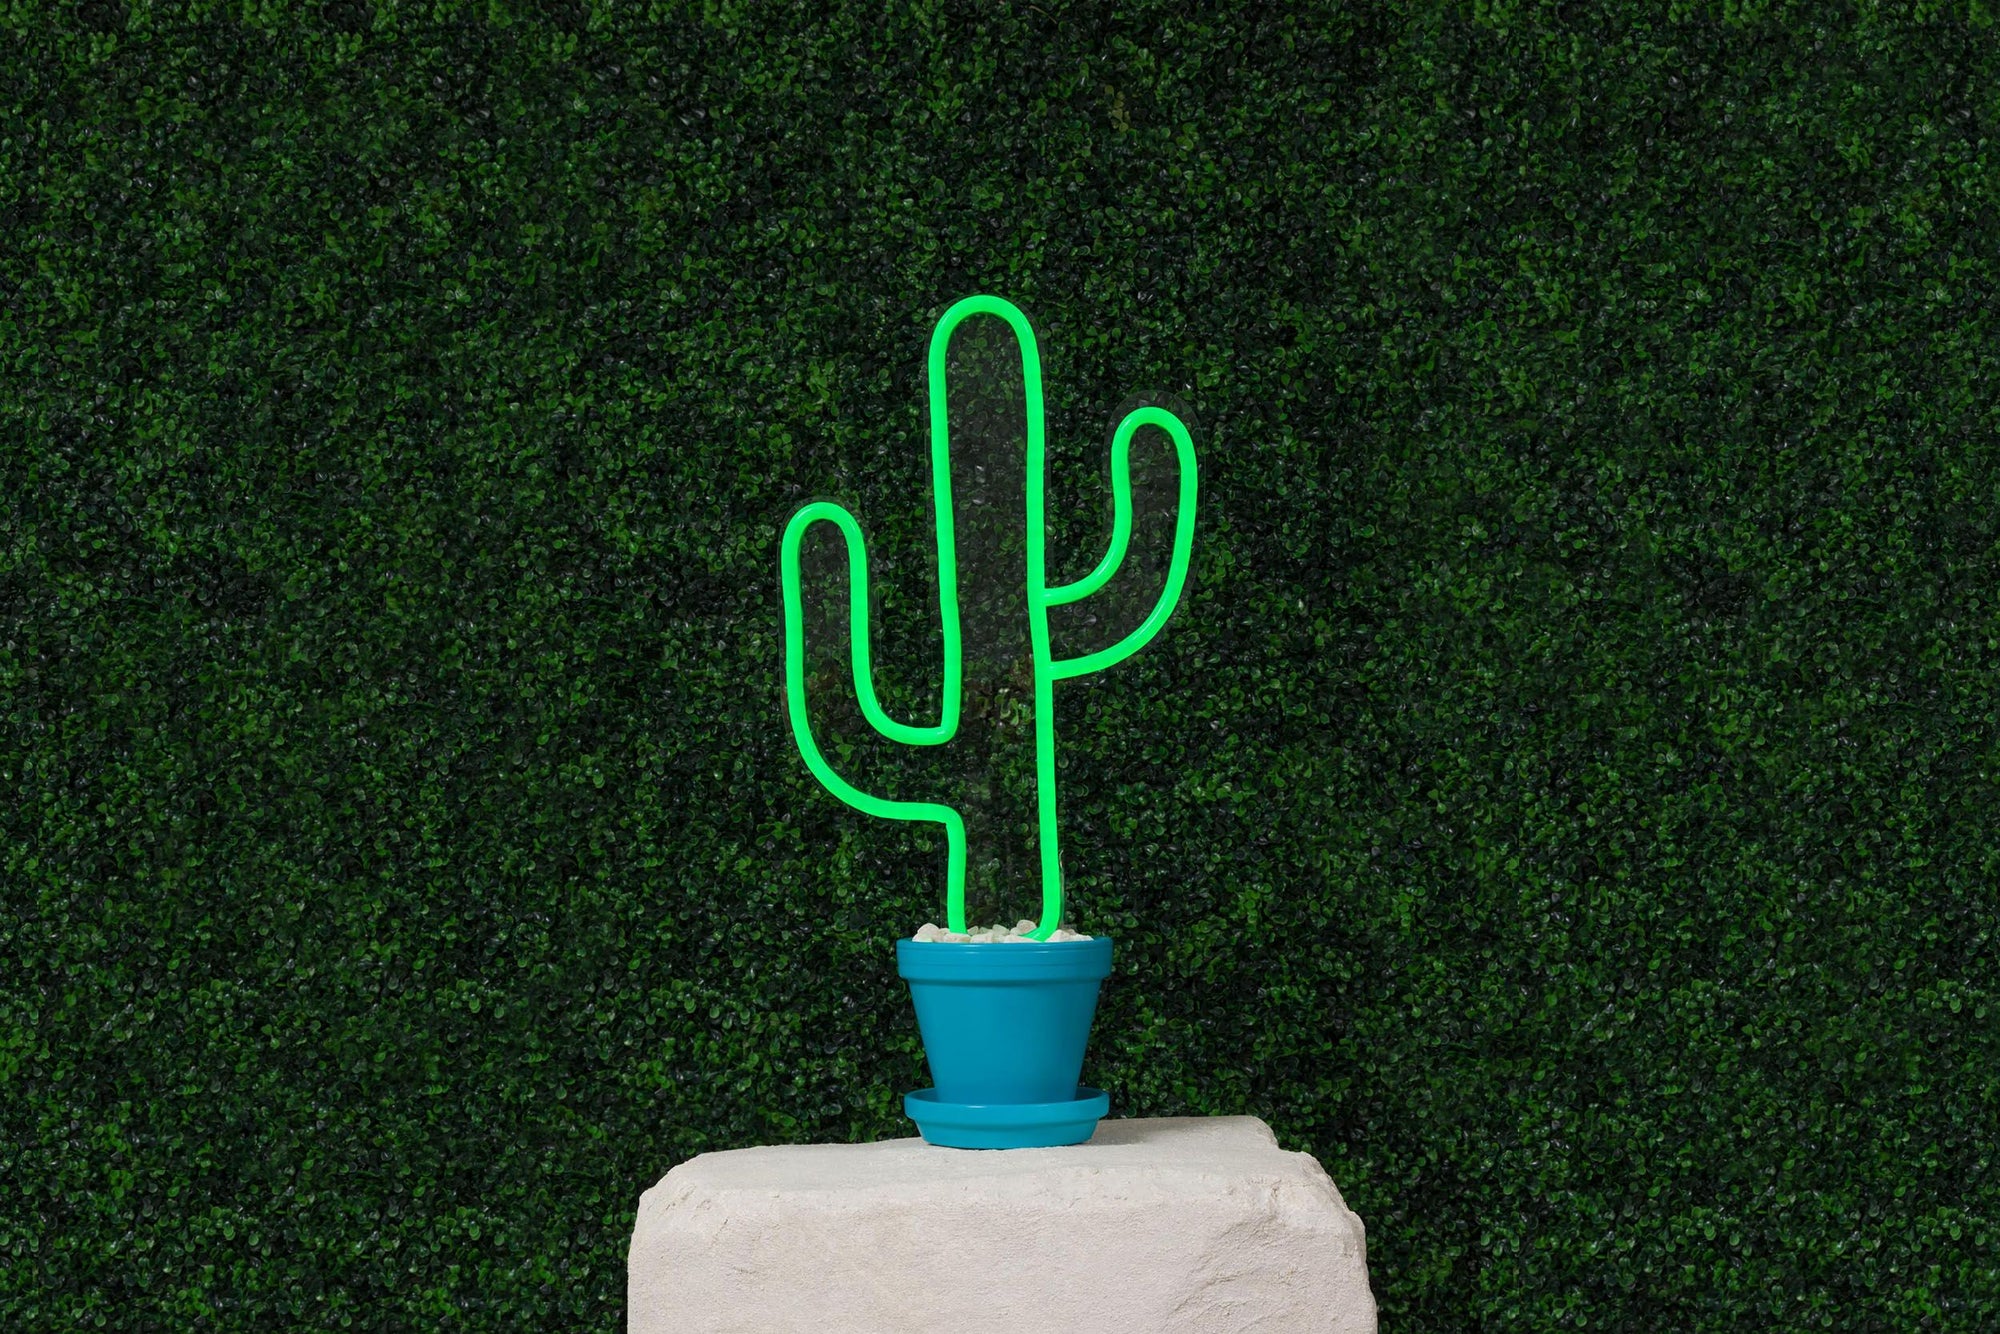 classic cactus shaped neon decor